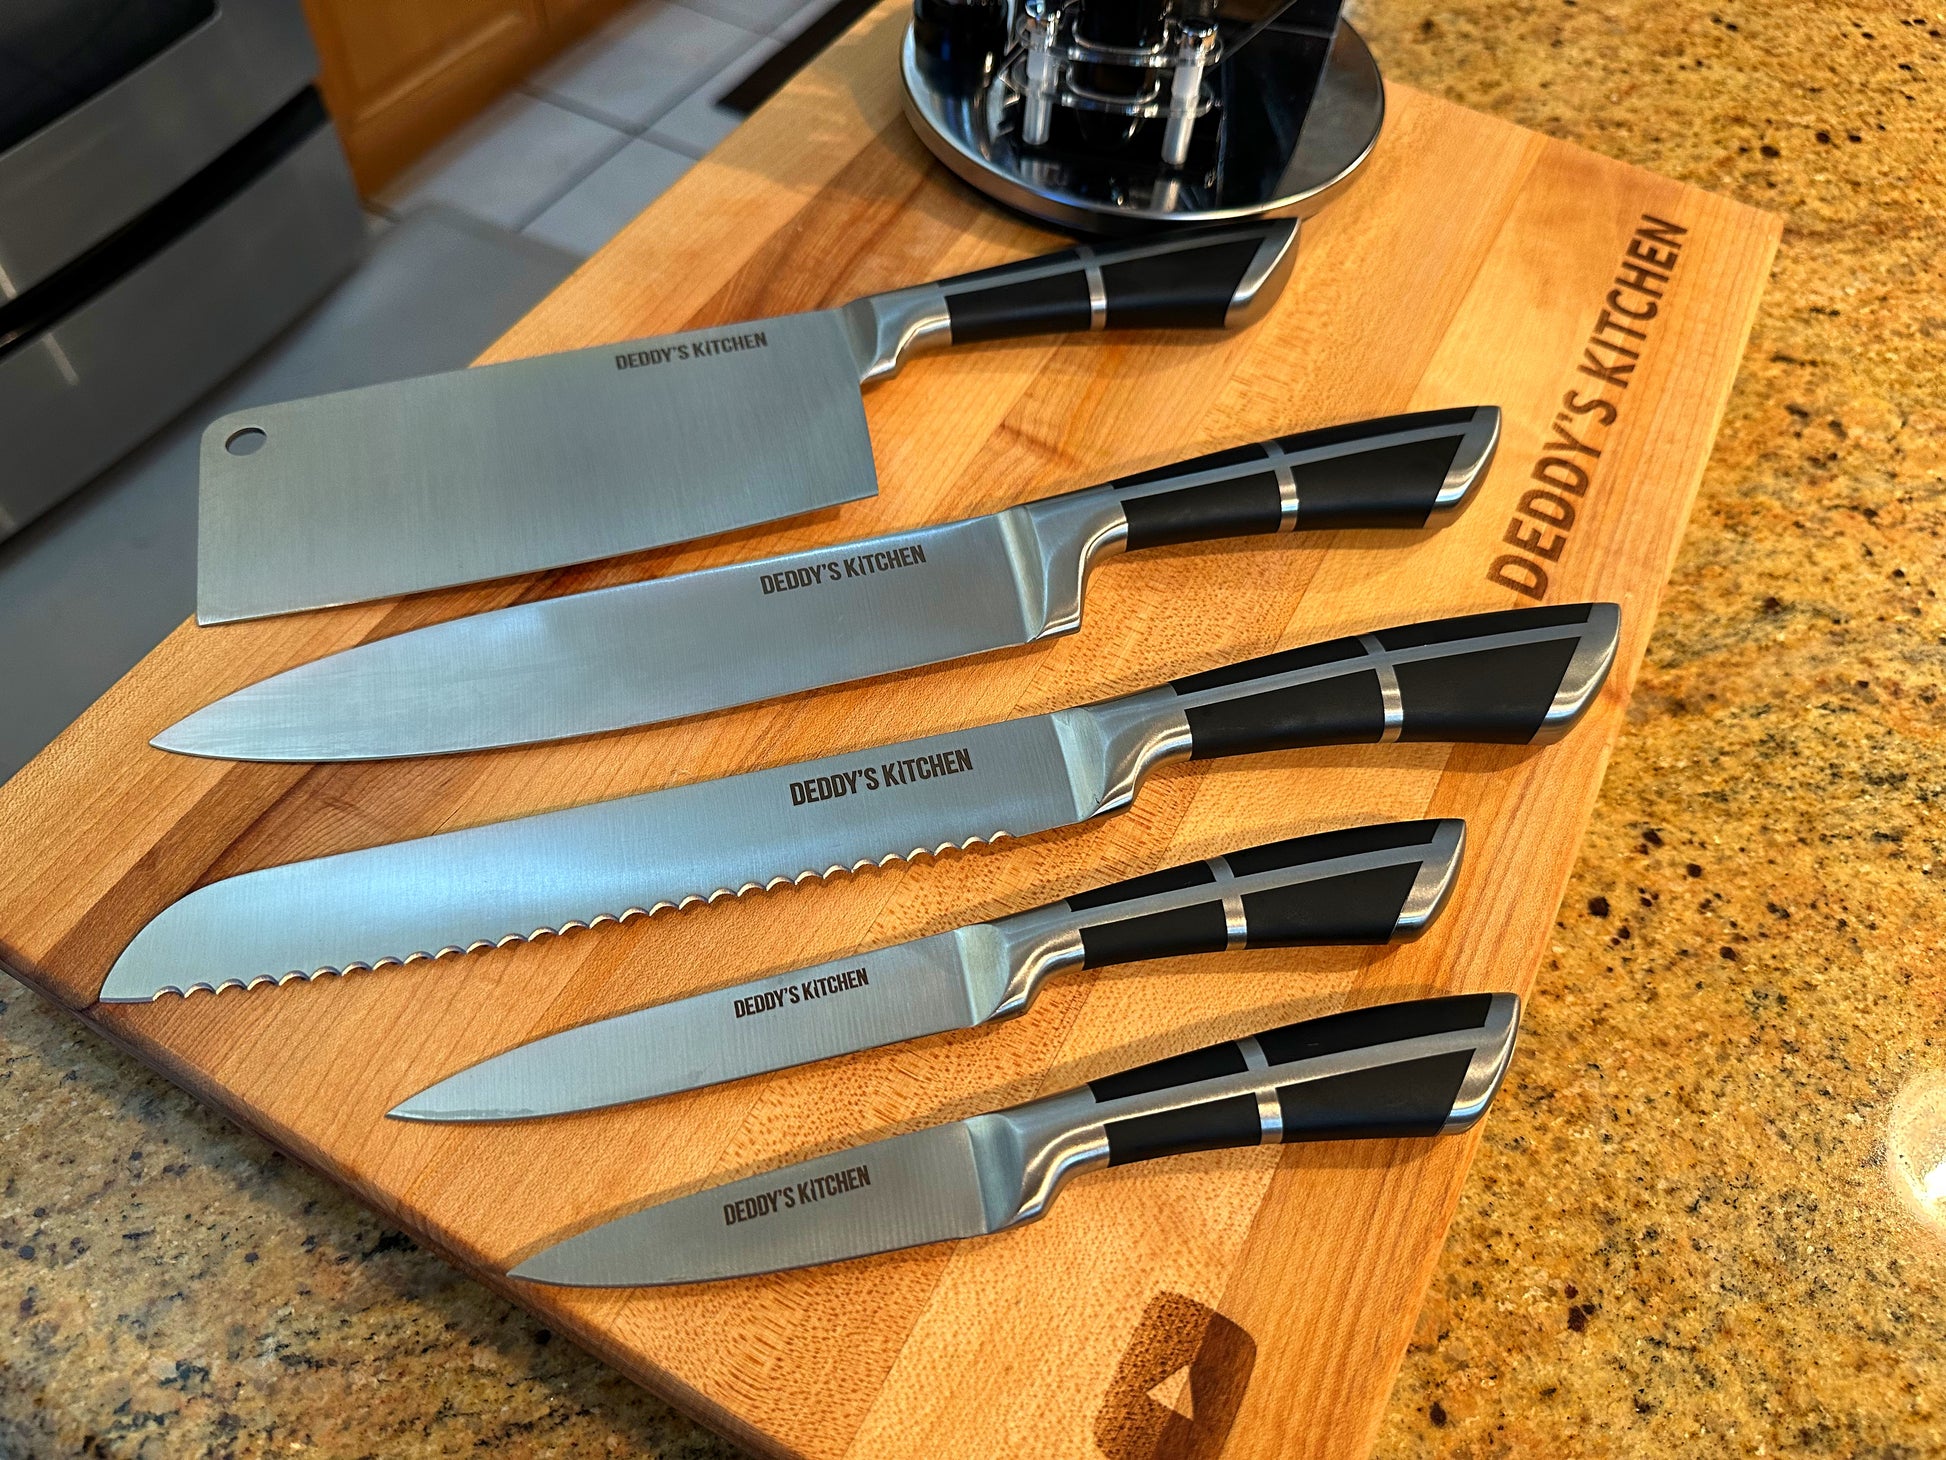 9-Piece Stainless Steel Chef's Knife Set – Deddy's Kitchen